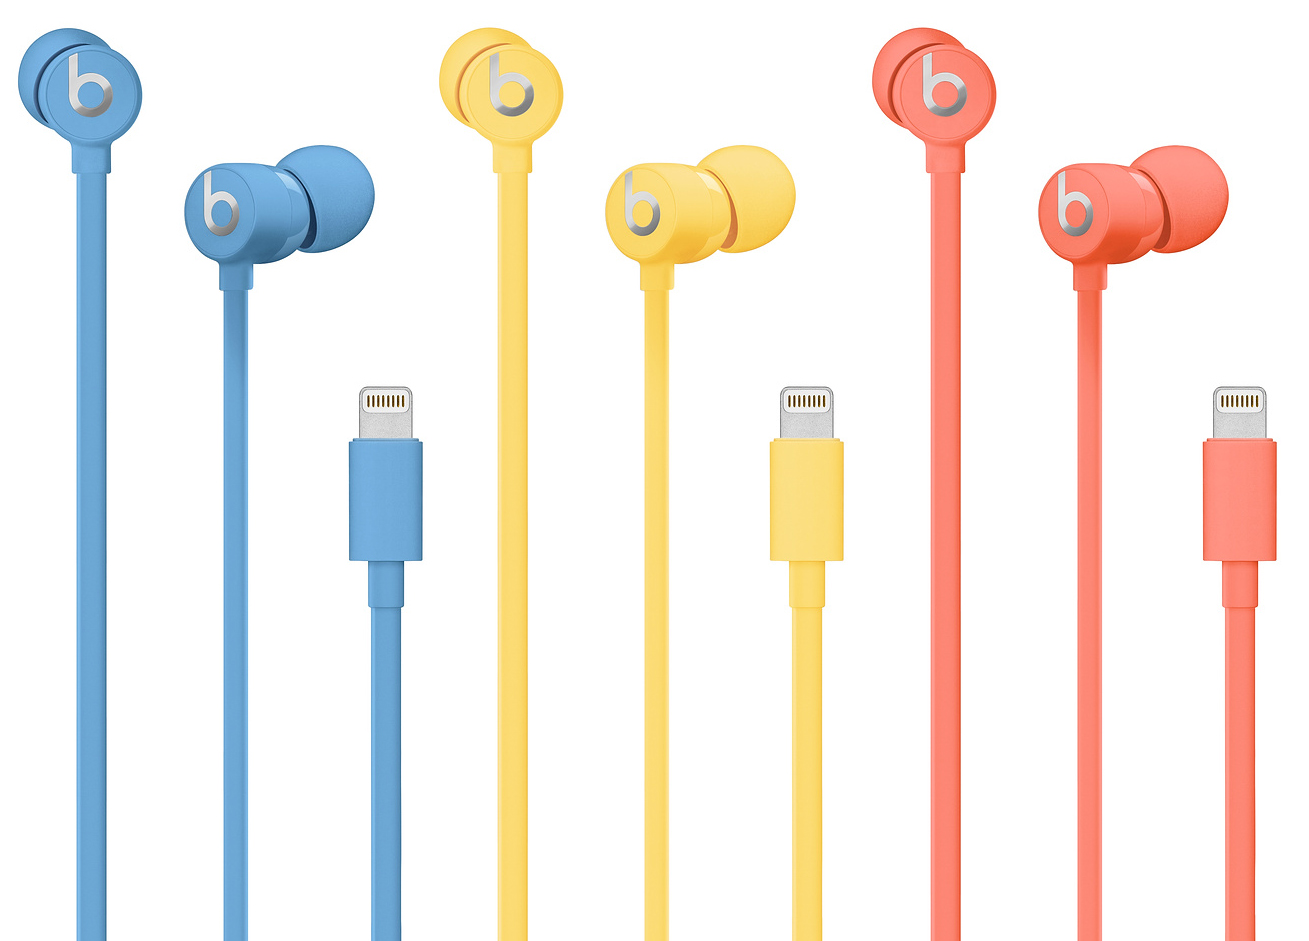 New colors of urBeats 3 earphones matching iPhone XR